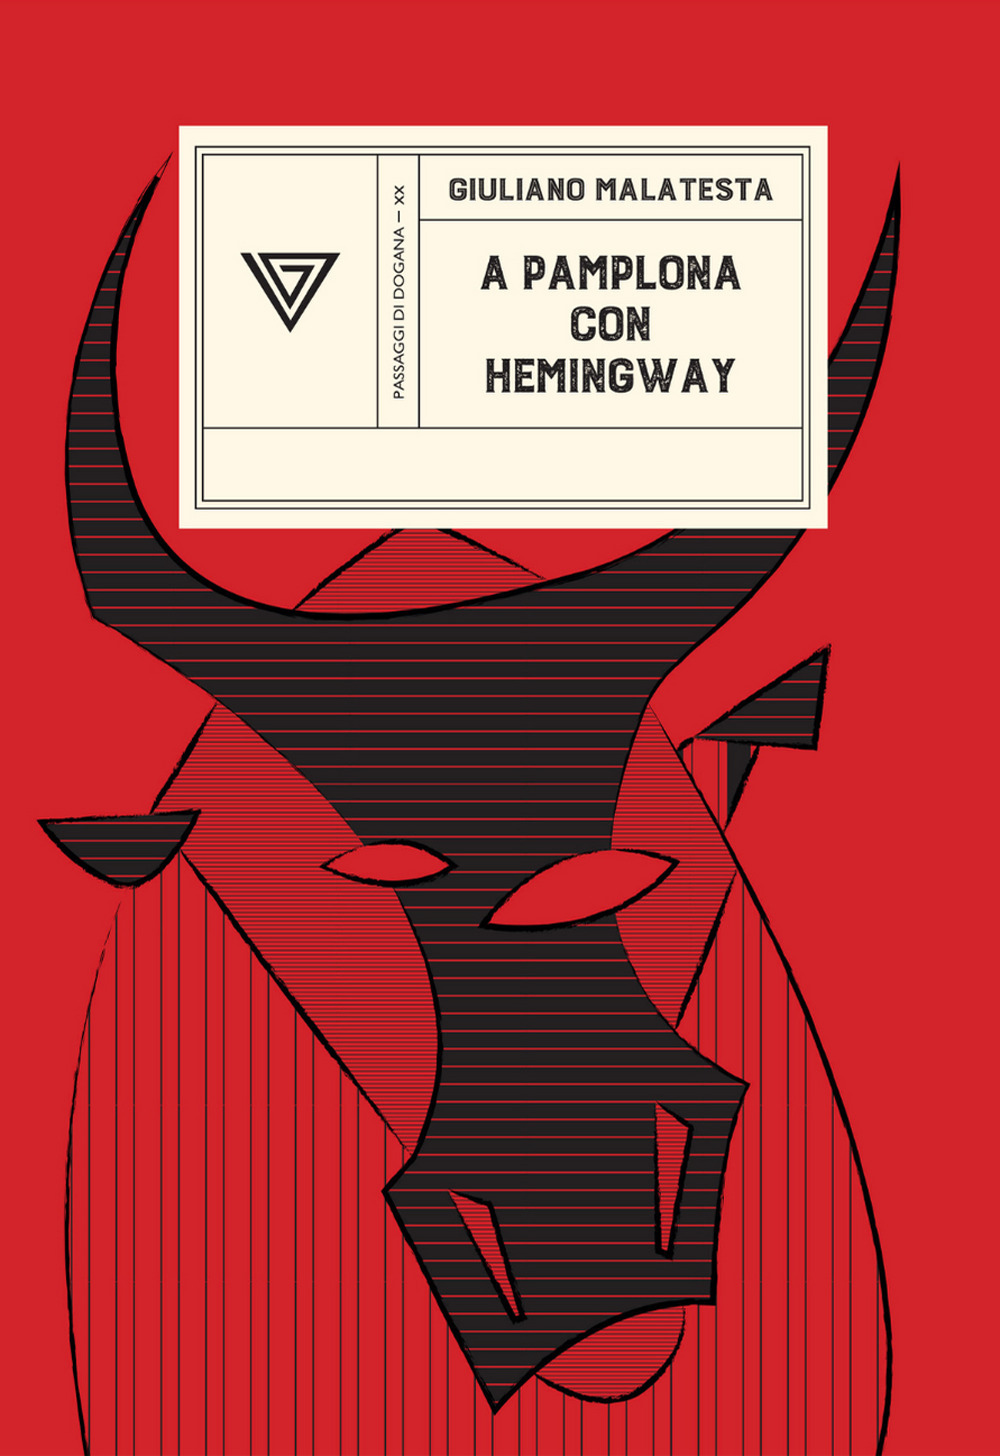 A Pamplona con hemingway